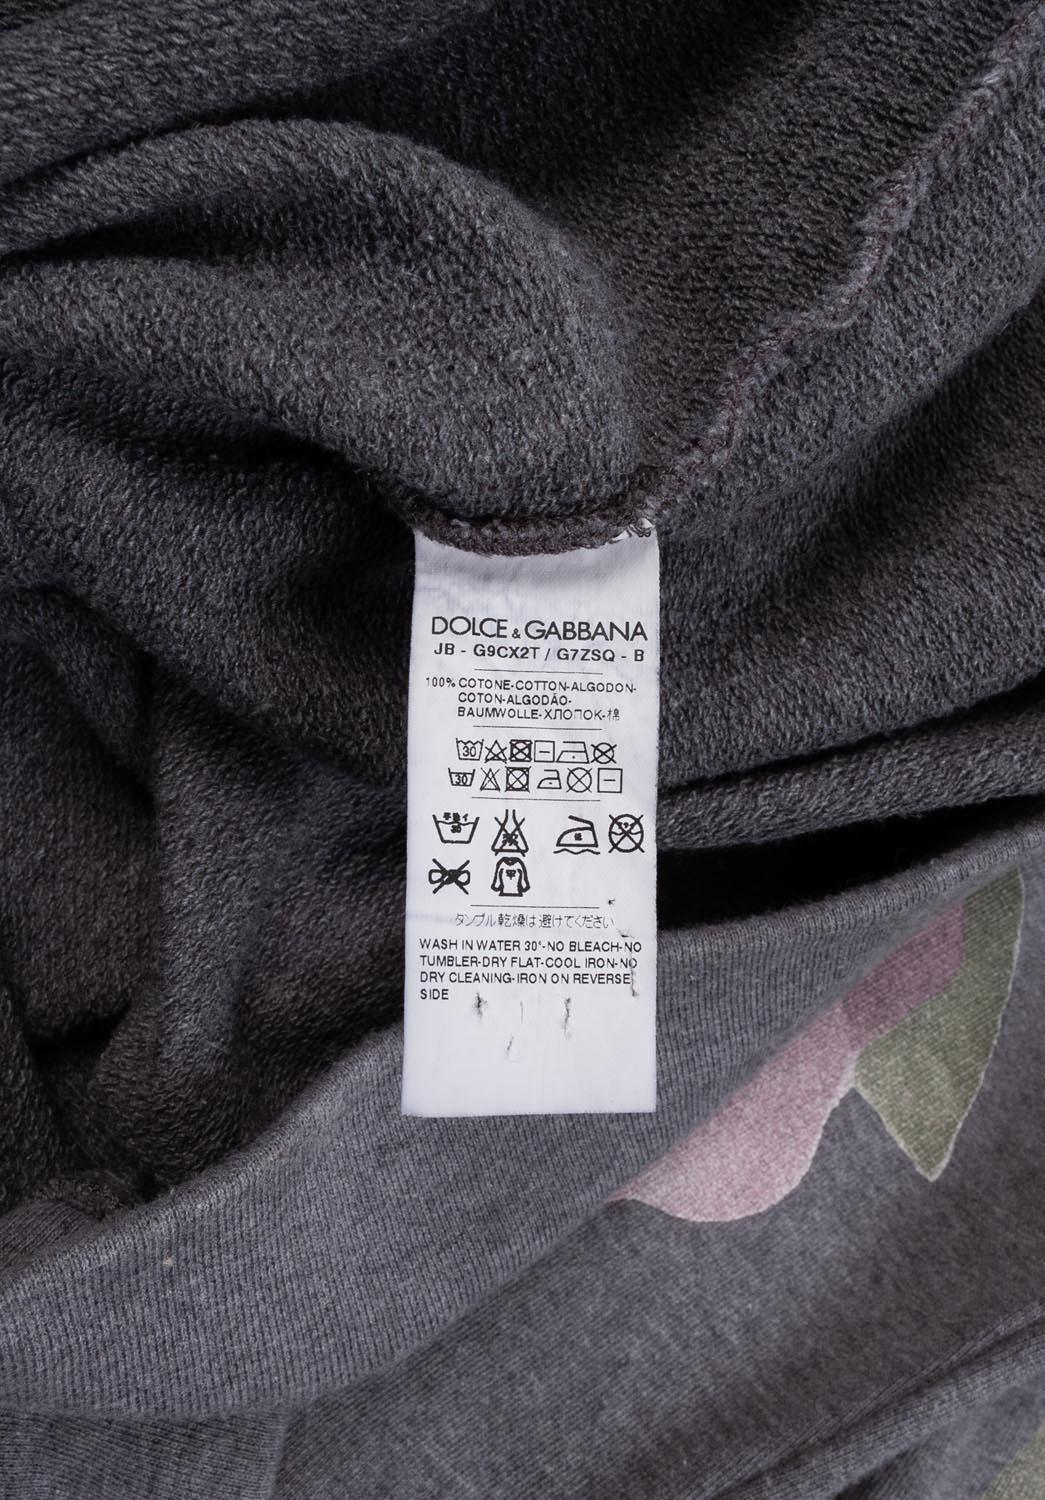 Dolce&Gabbana Men Sweatshirt Jumper Top Size M/L, S400 For Sale 1